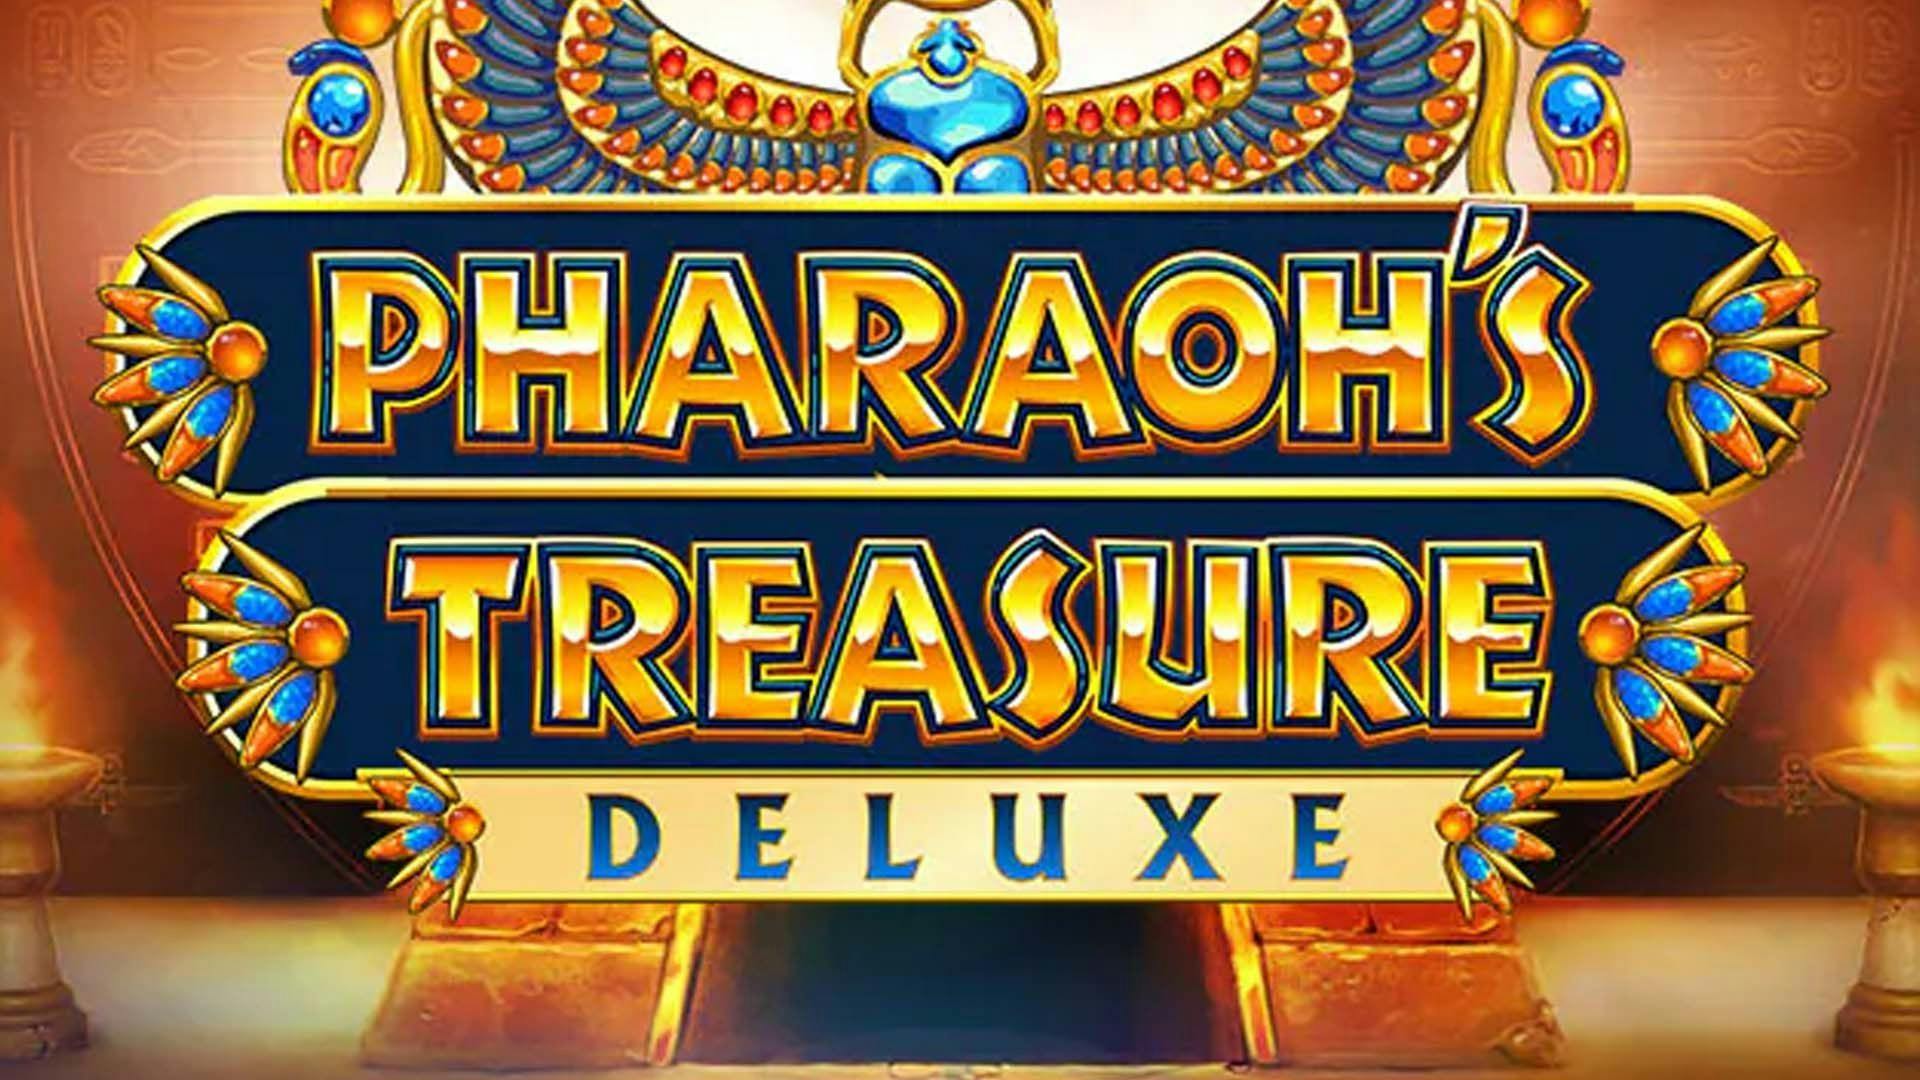 Pharaoh's Treasure Deluxe Slot Machine Online Free Game Play